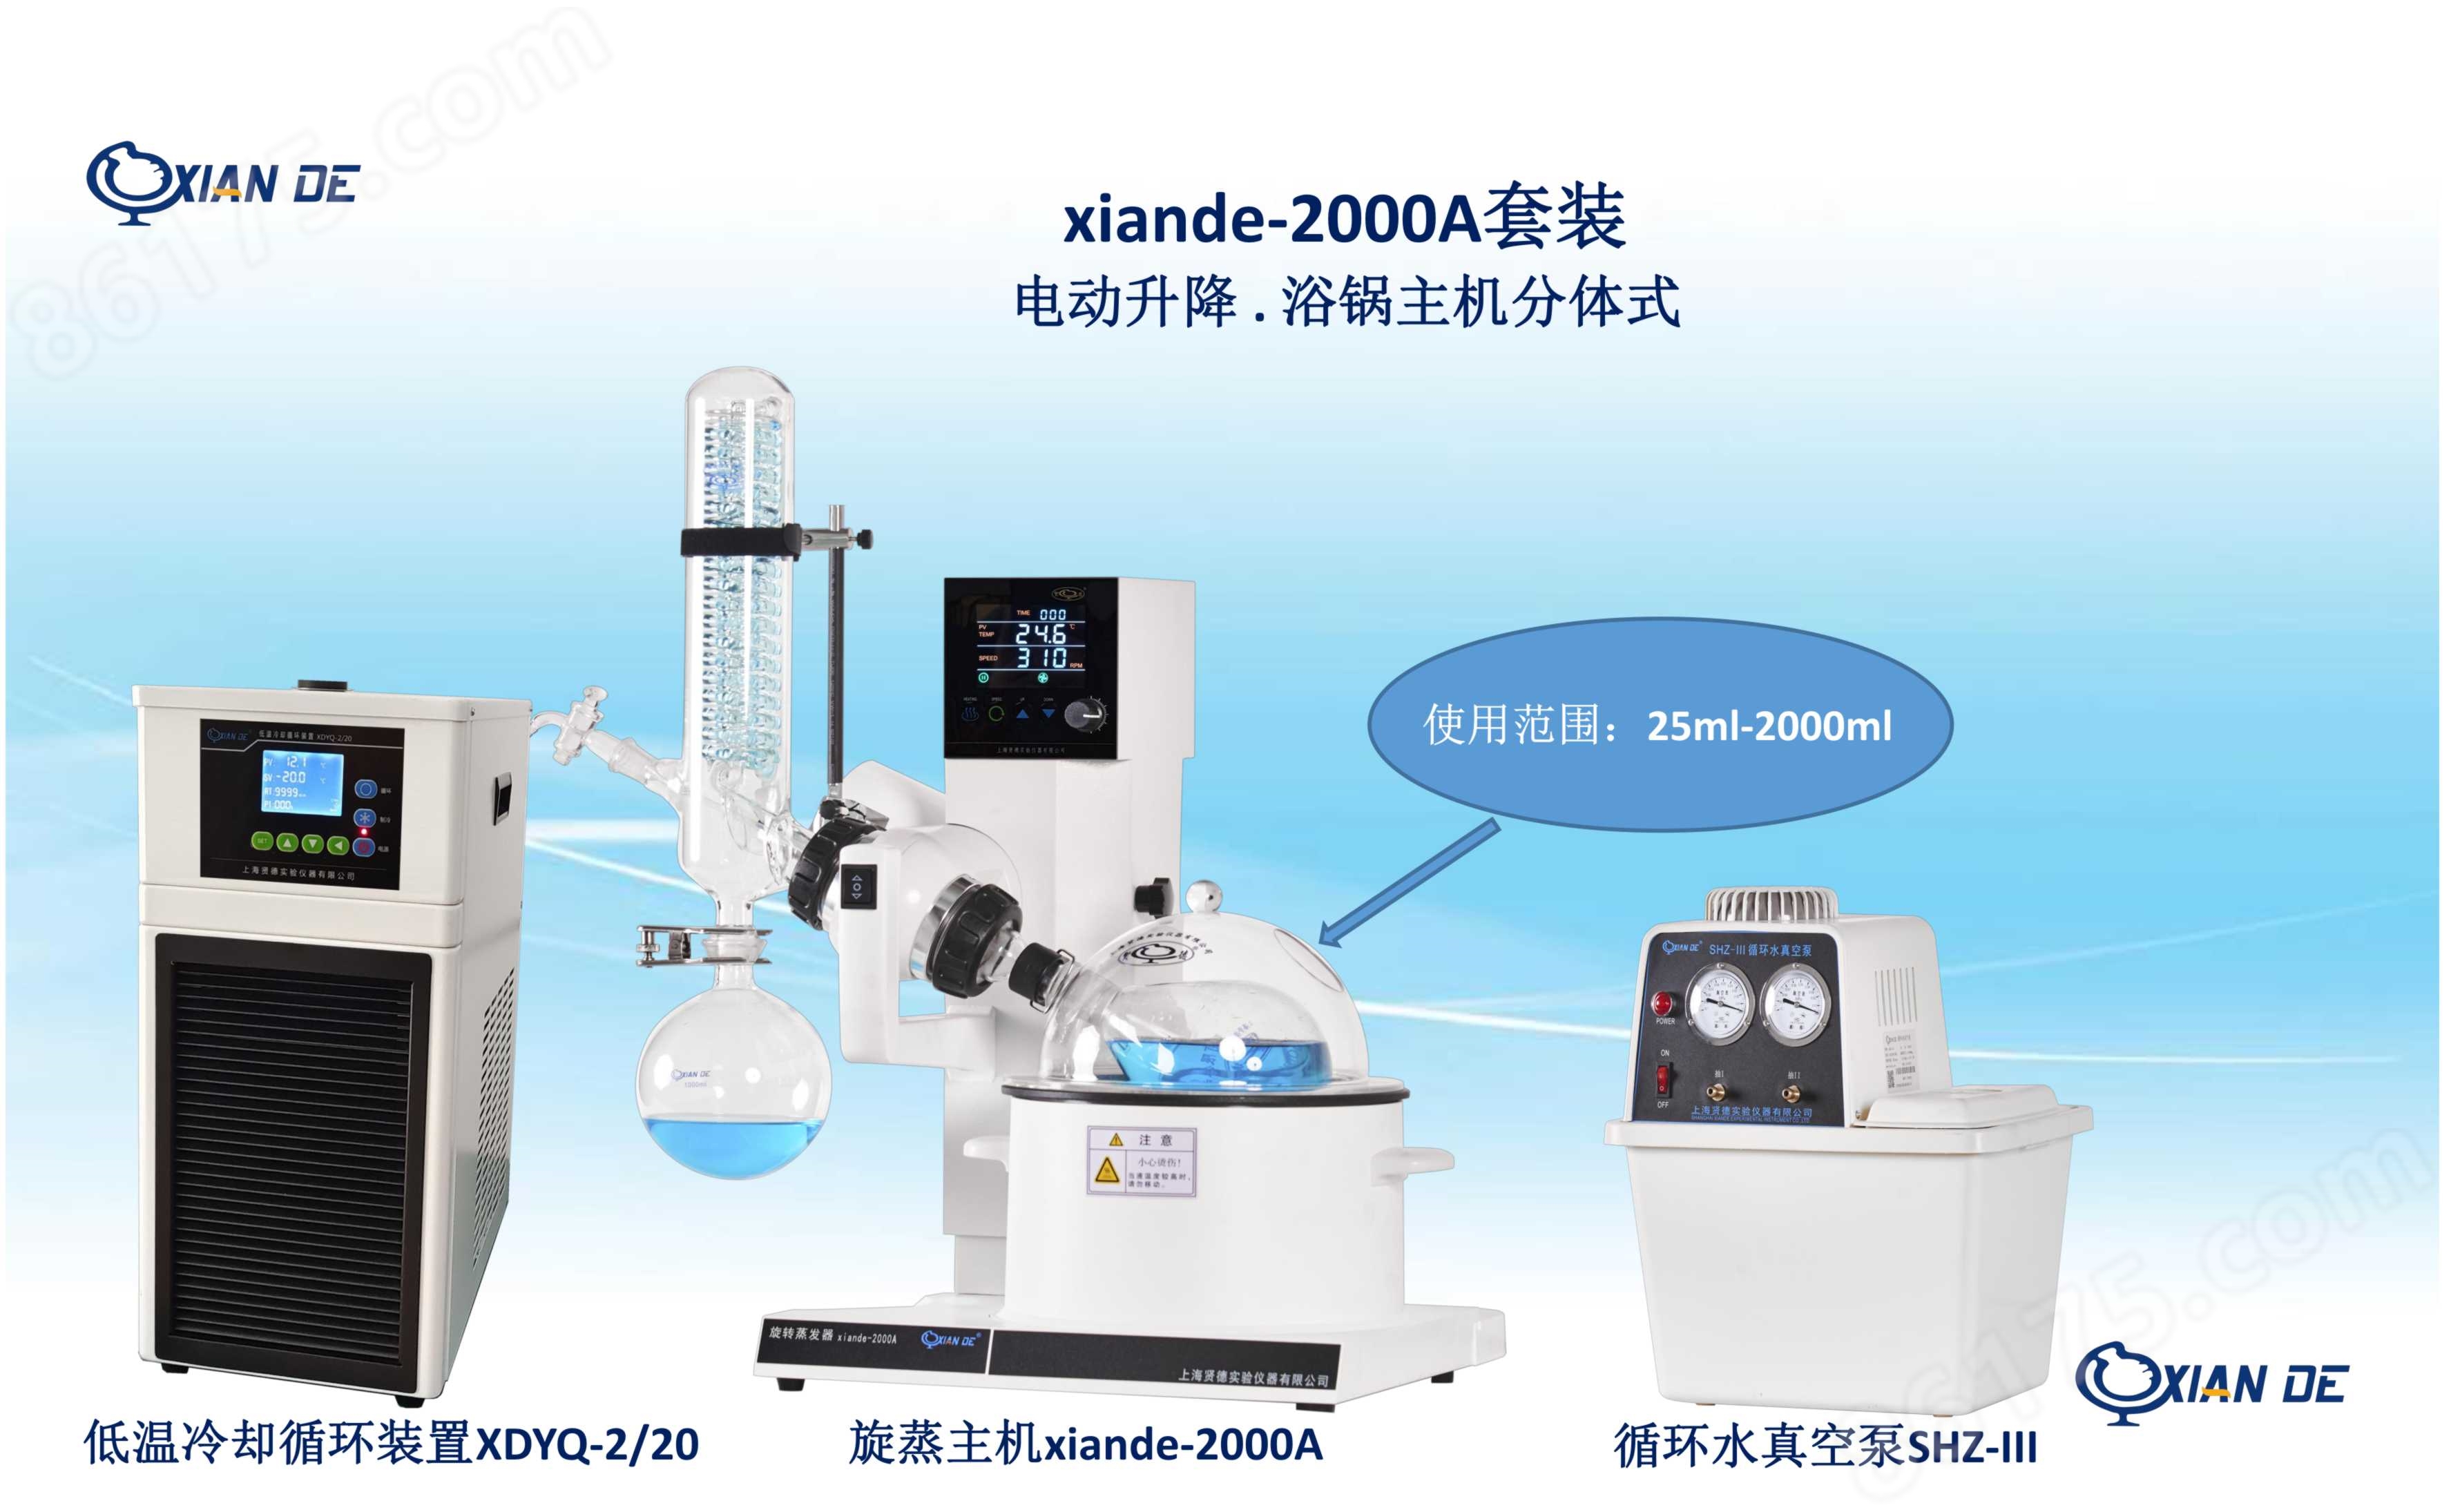 xiande-2000A套装新.jpg